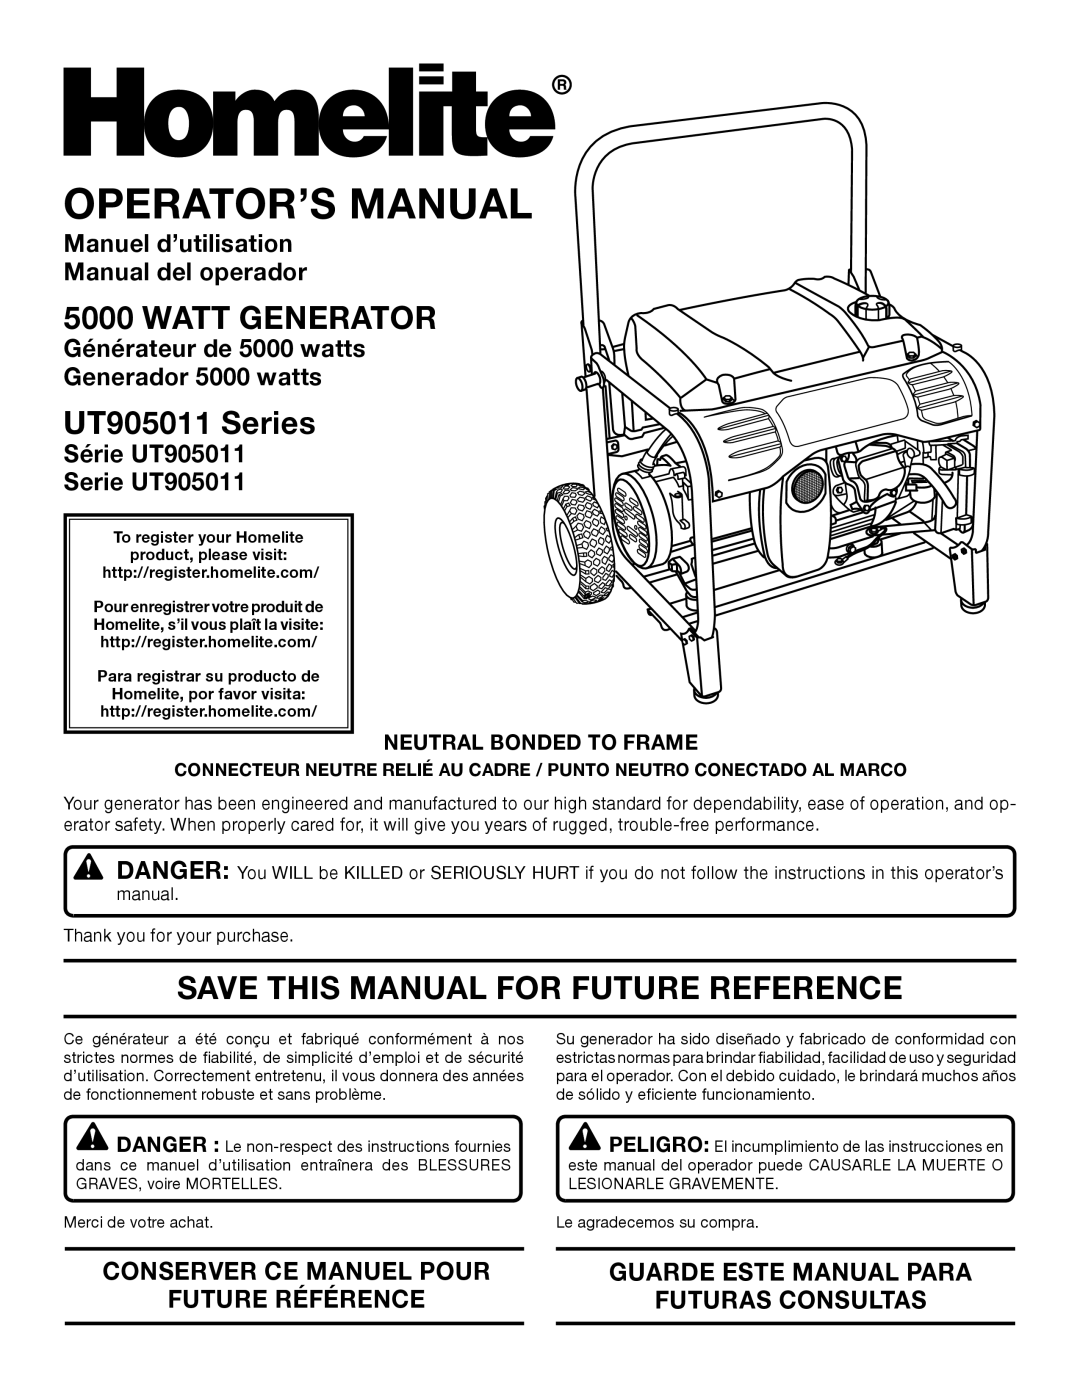 Homelite manuel dutilisation Watt Generator, UT905011 Series, Save This Manual For Future Reference, Operator’S Manual 